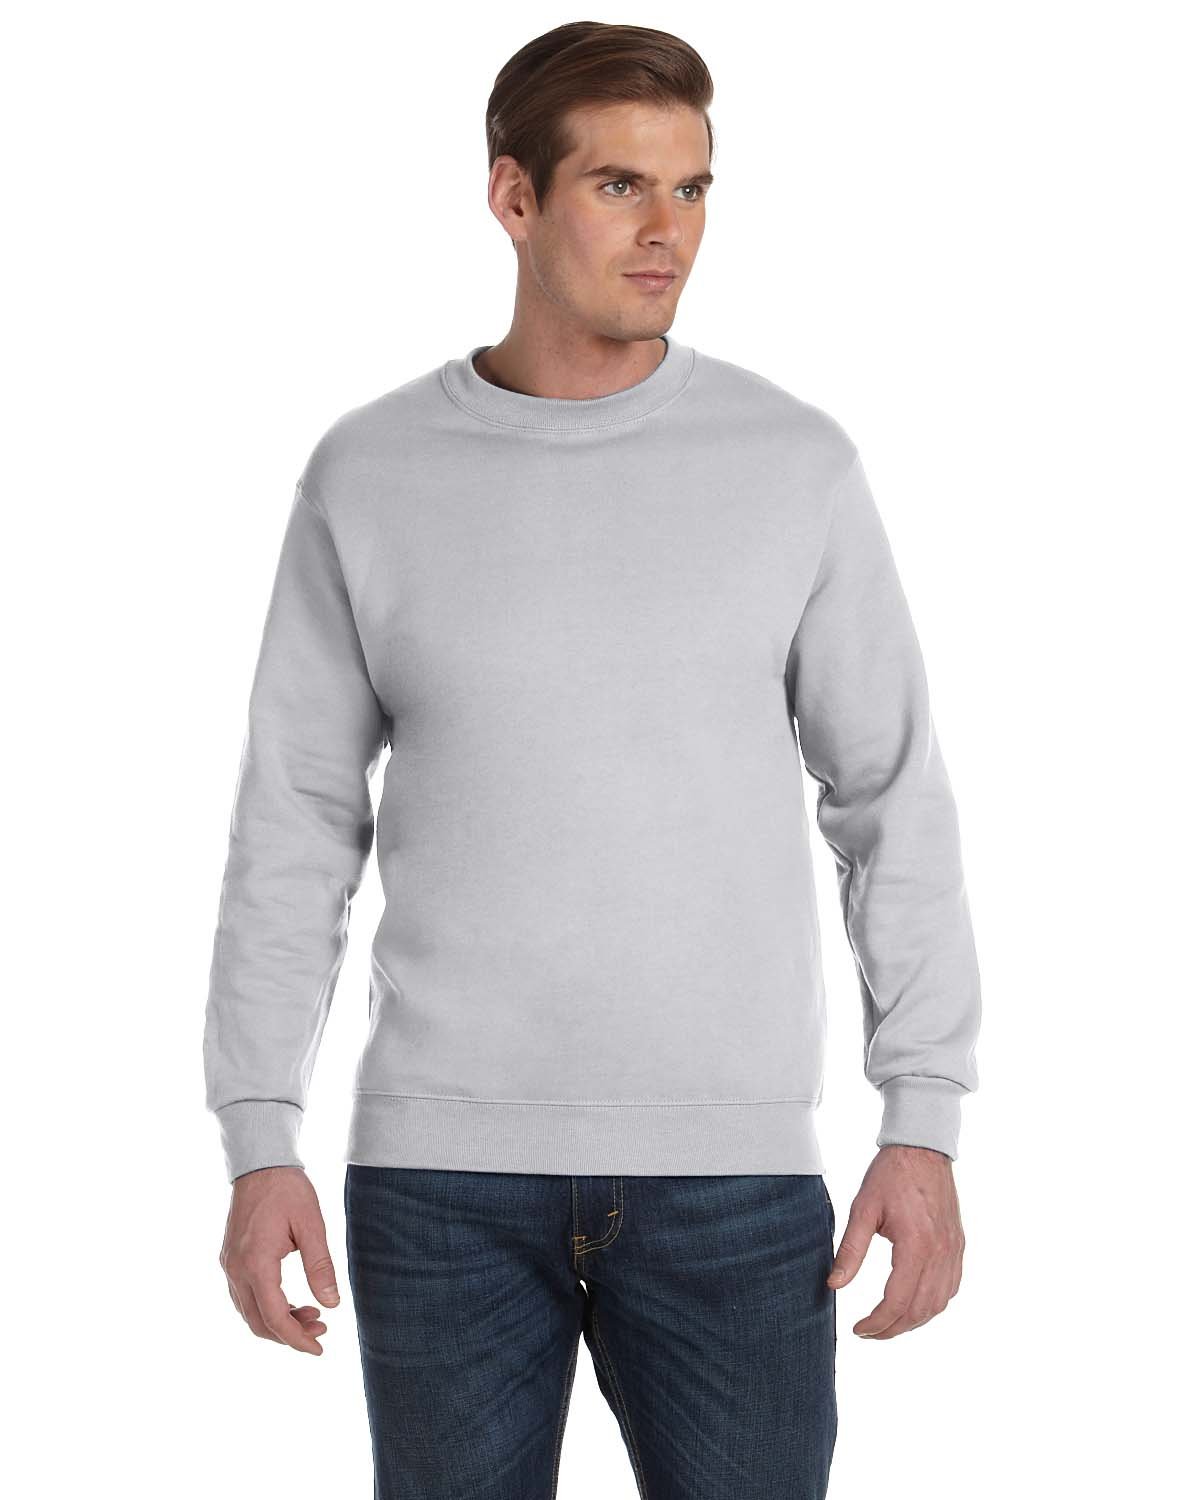 15 Cheap Hoodies & Sweatshirts that are Under $15 – Shirts Bulk